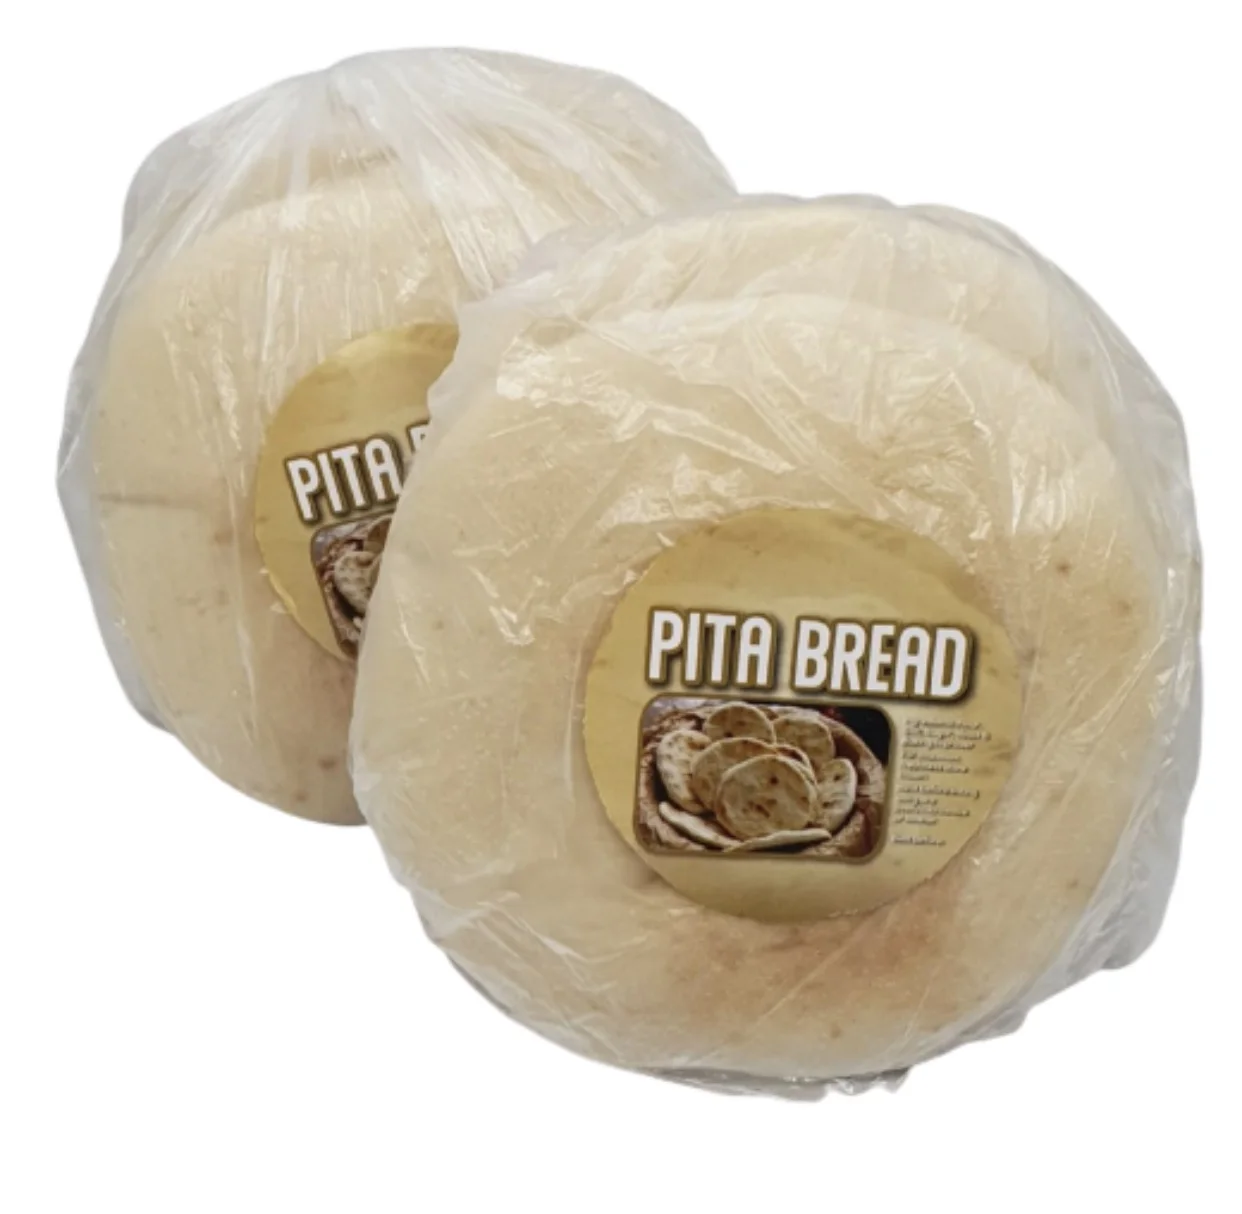 Elijah’s Pita Bread (Arabic Bread) (Seriously the best pita in Manila) -10 units (6" / 100g each)